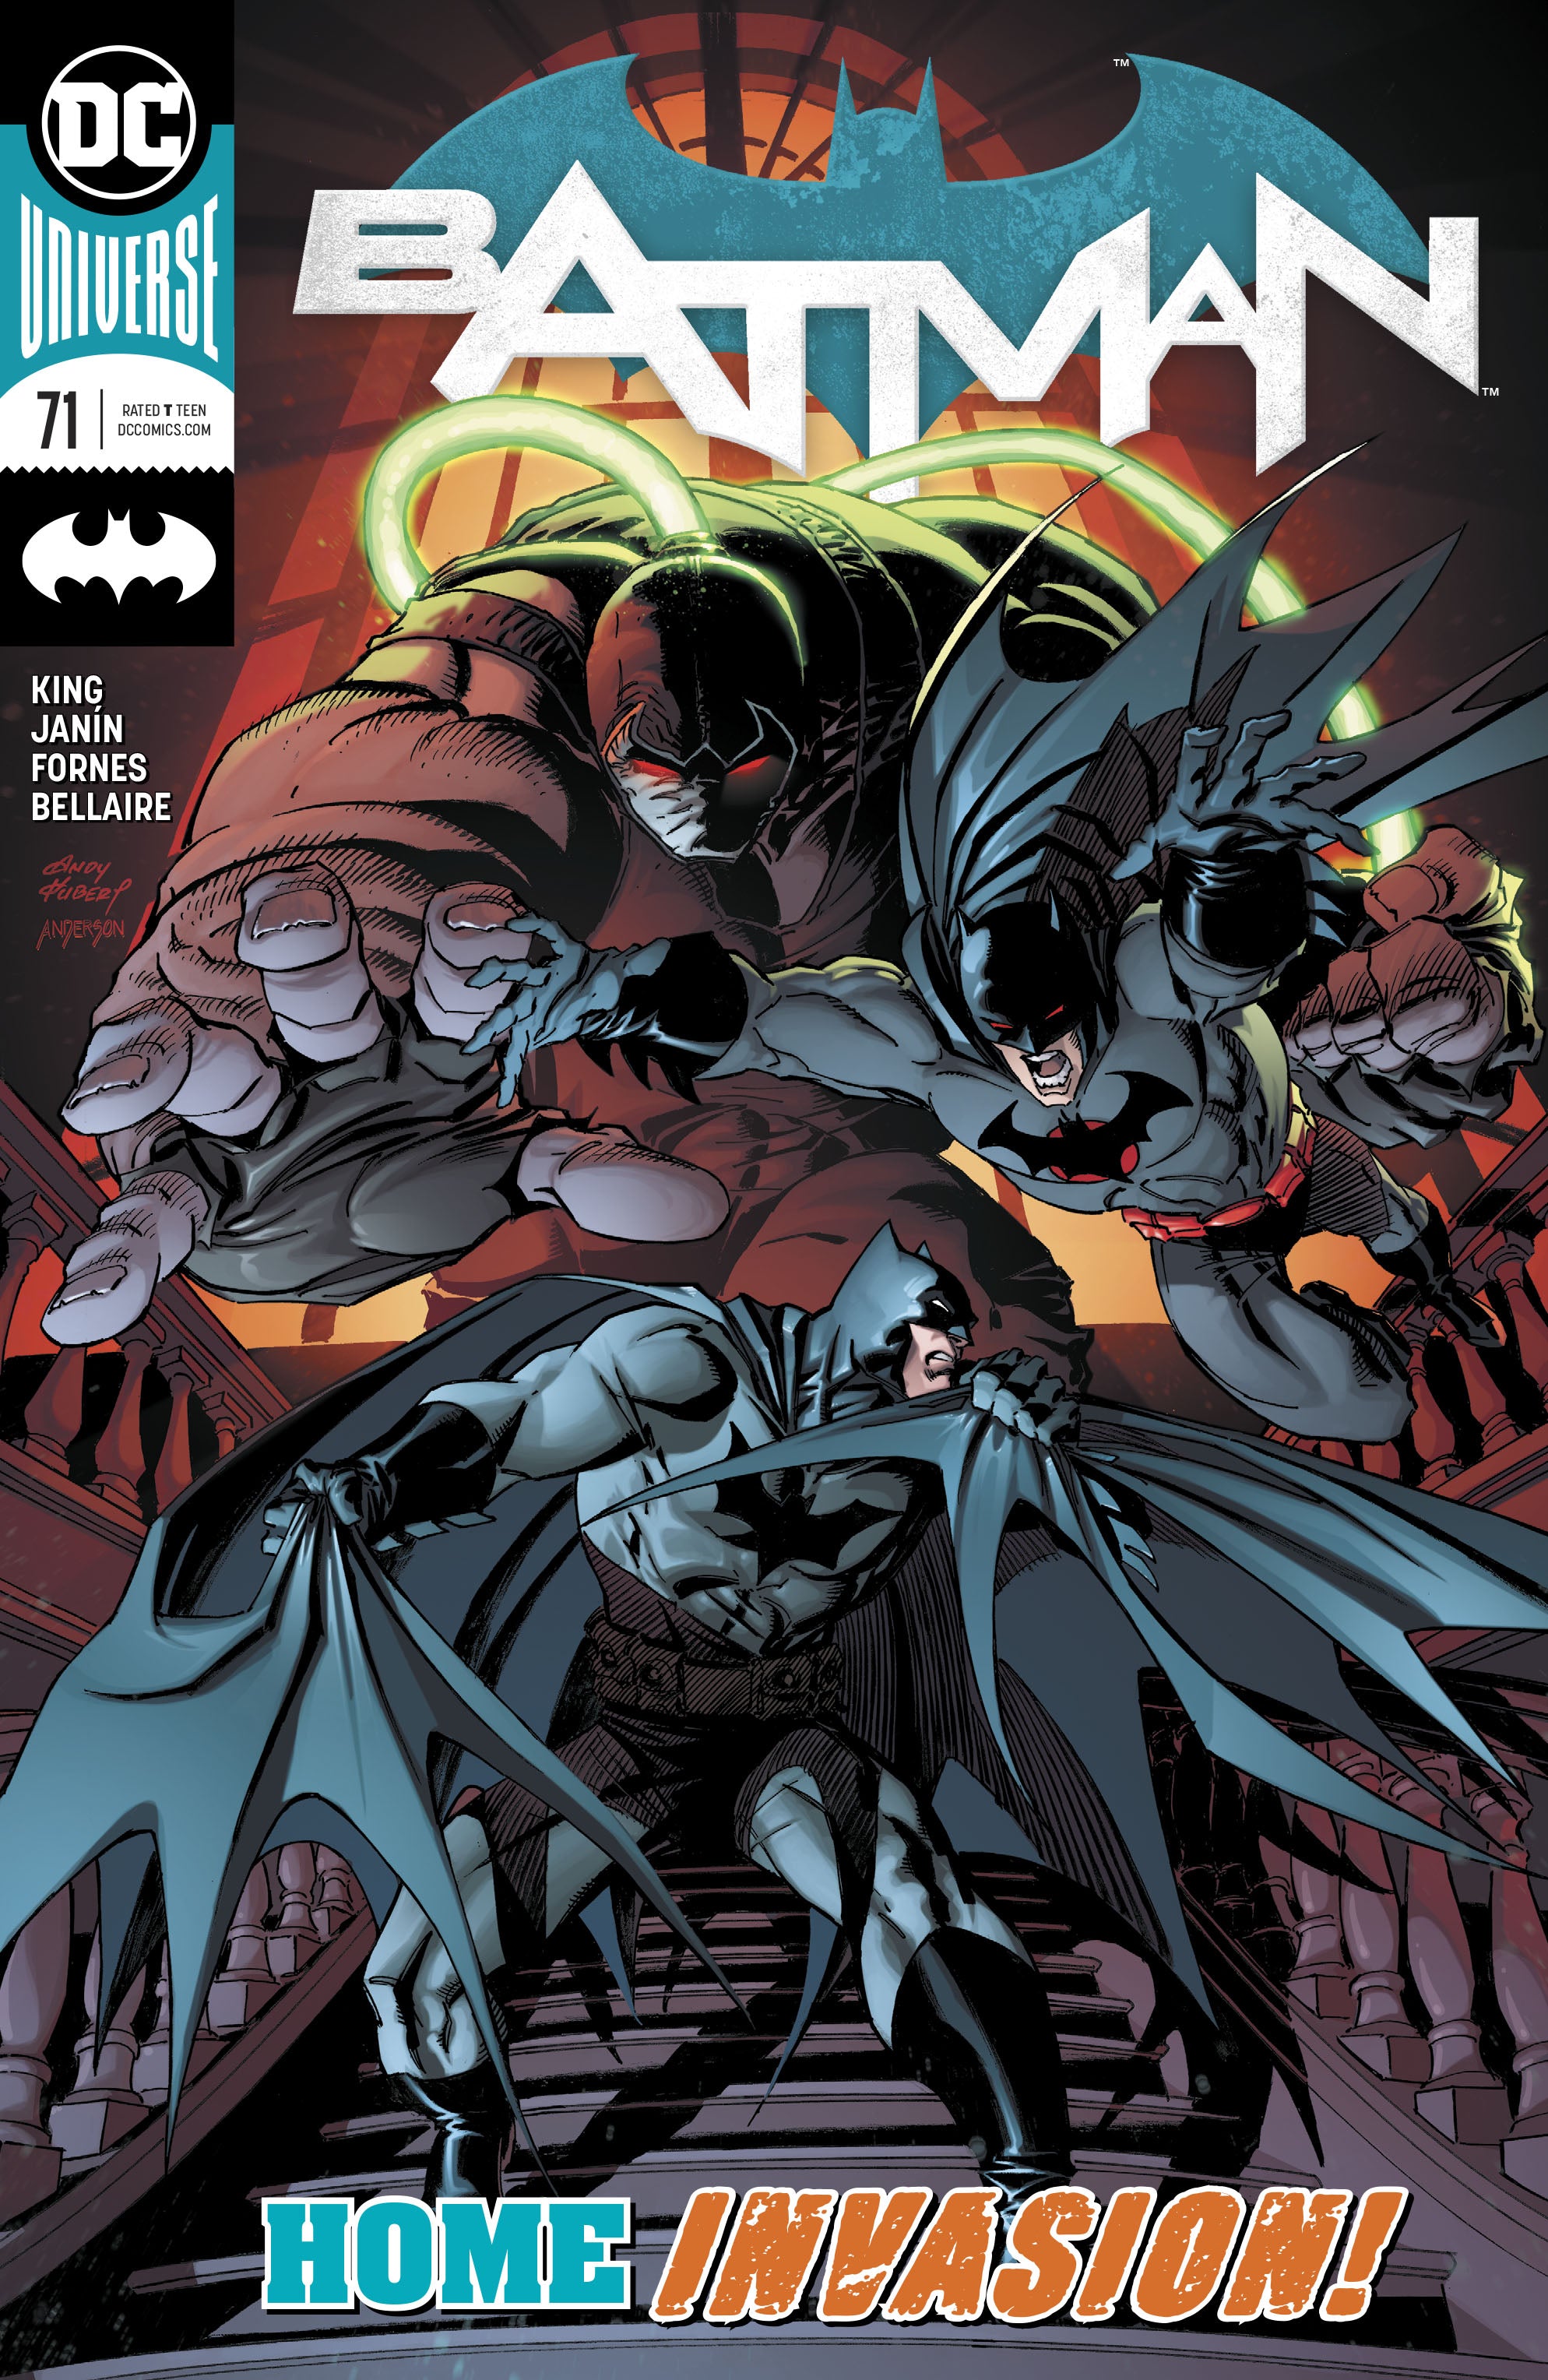 BATMAN #71 | Game Master's Emporium (The New GME)